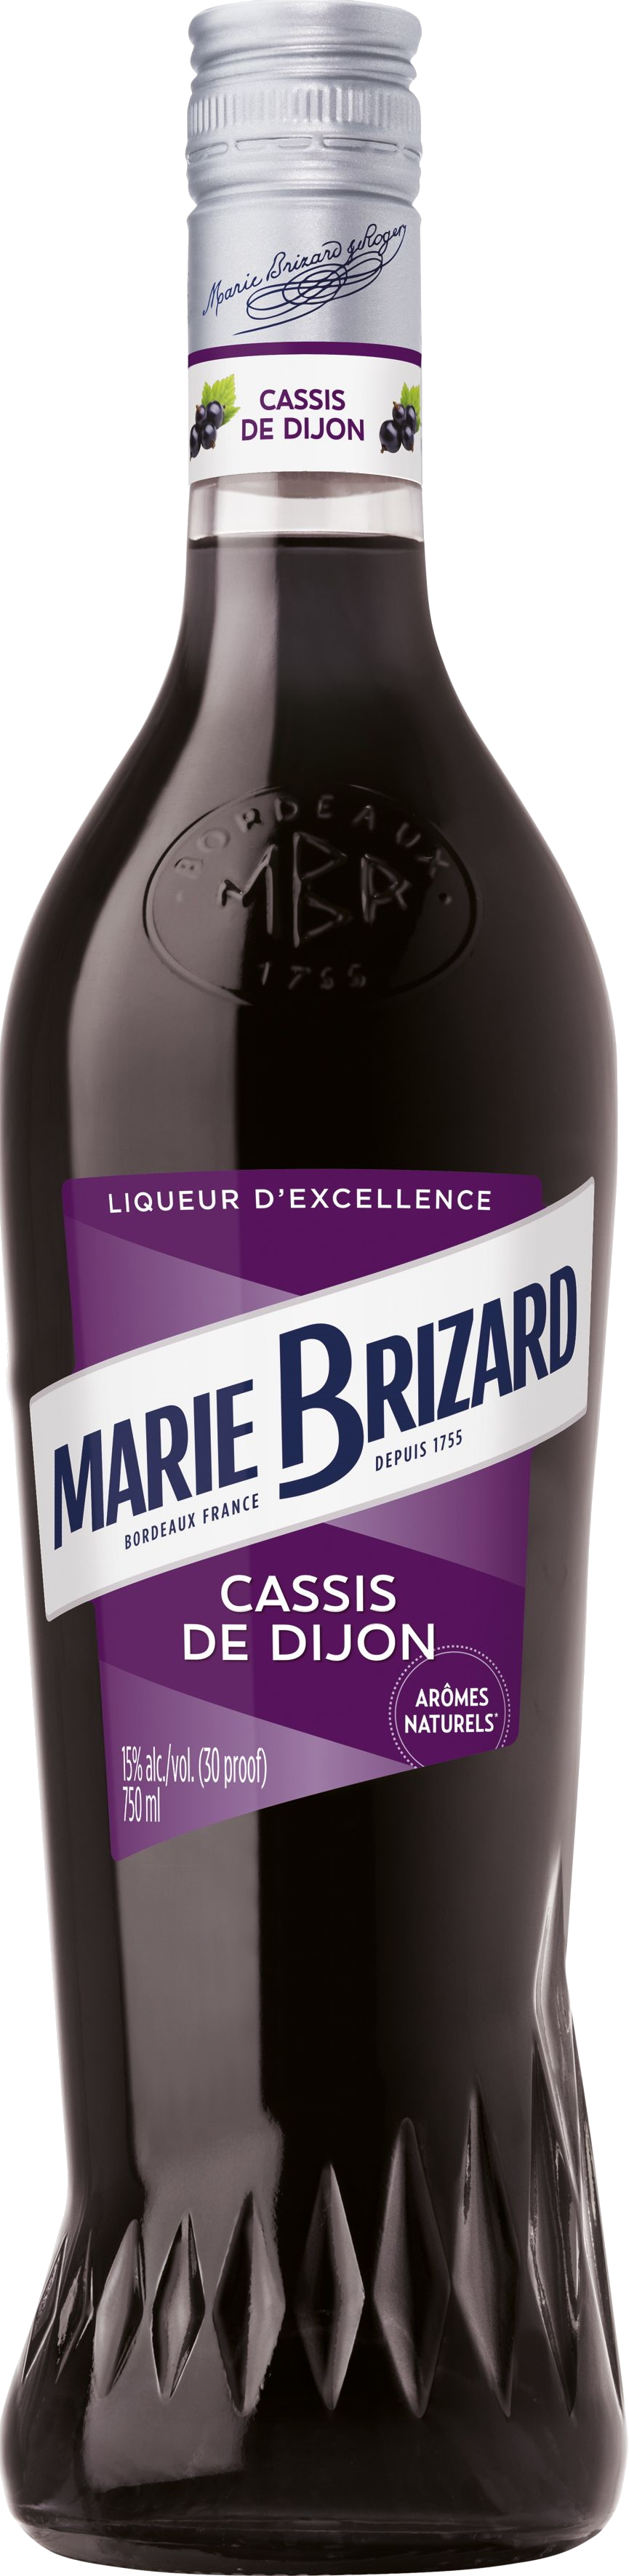 Marie Brizard Banana Liqueur